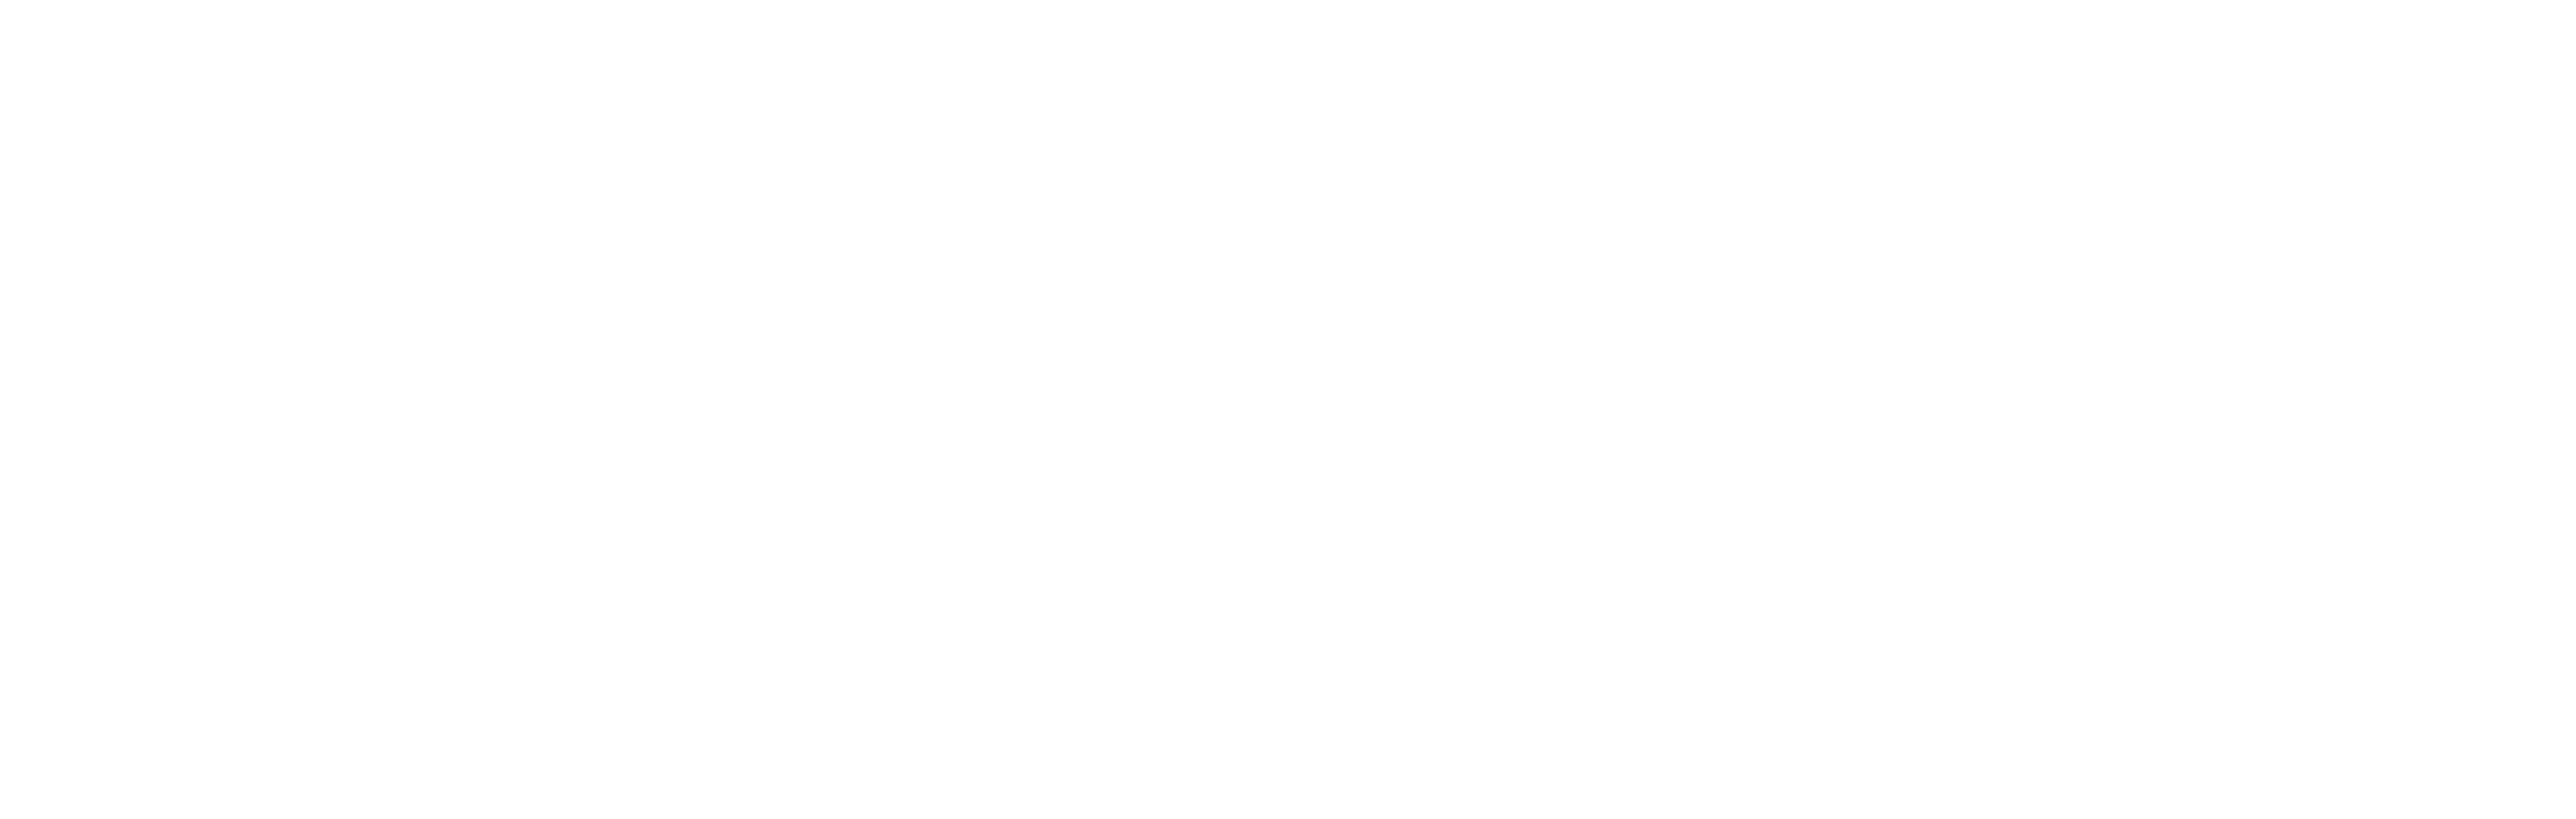 RE-Elemento_O-PRIMEIRO-EVENTO2